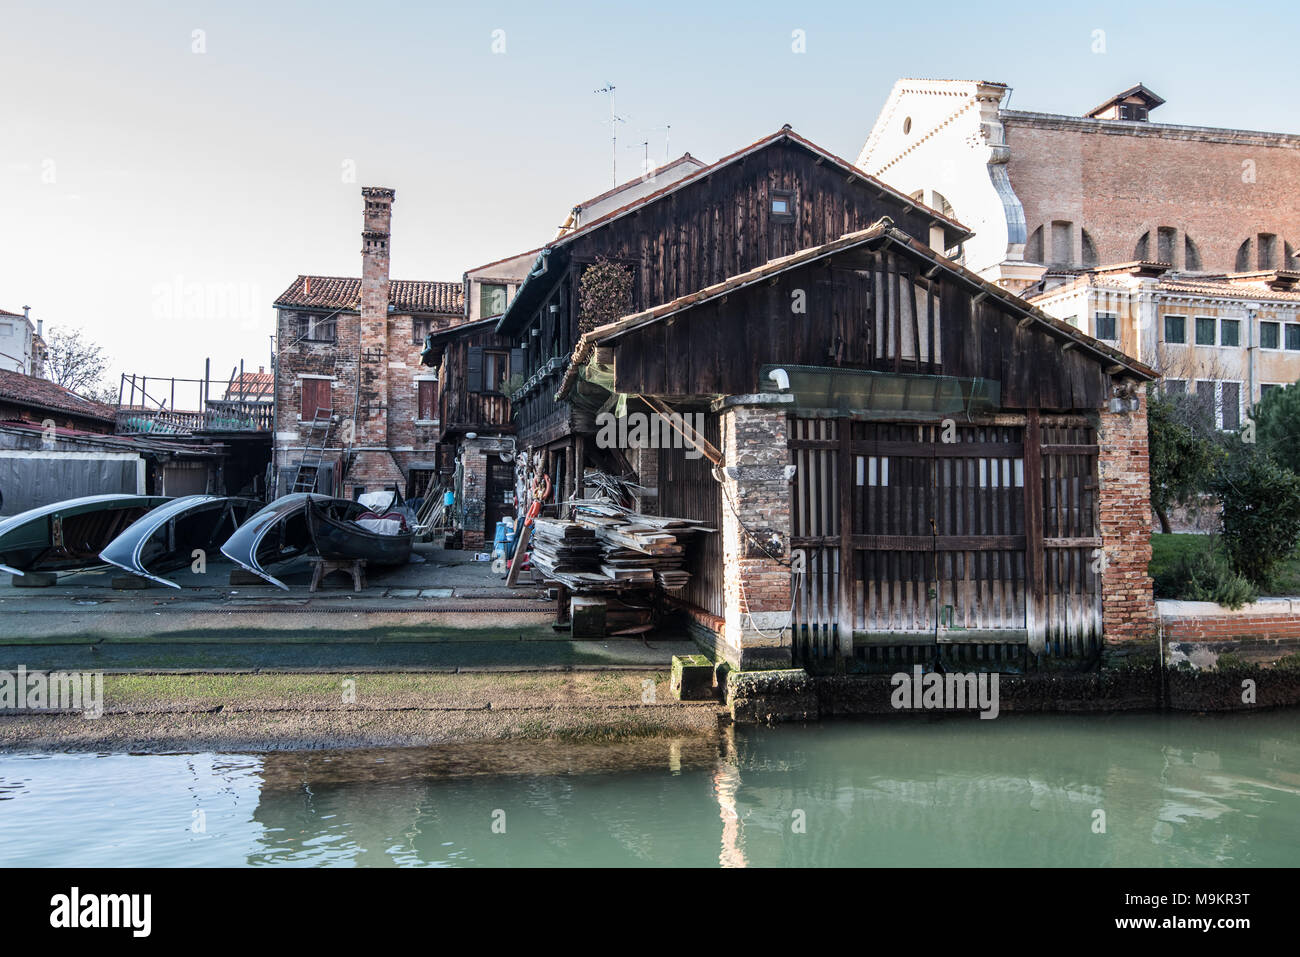 ITaly, Venice - Ordinary day in Venice, Italy with canals and gondolas around the city Stock Photo